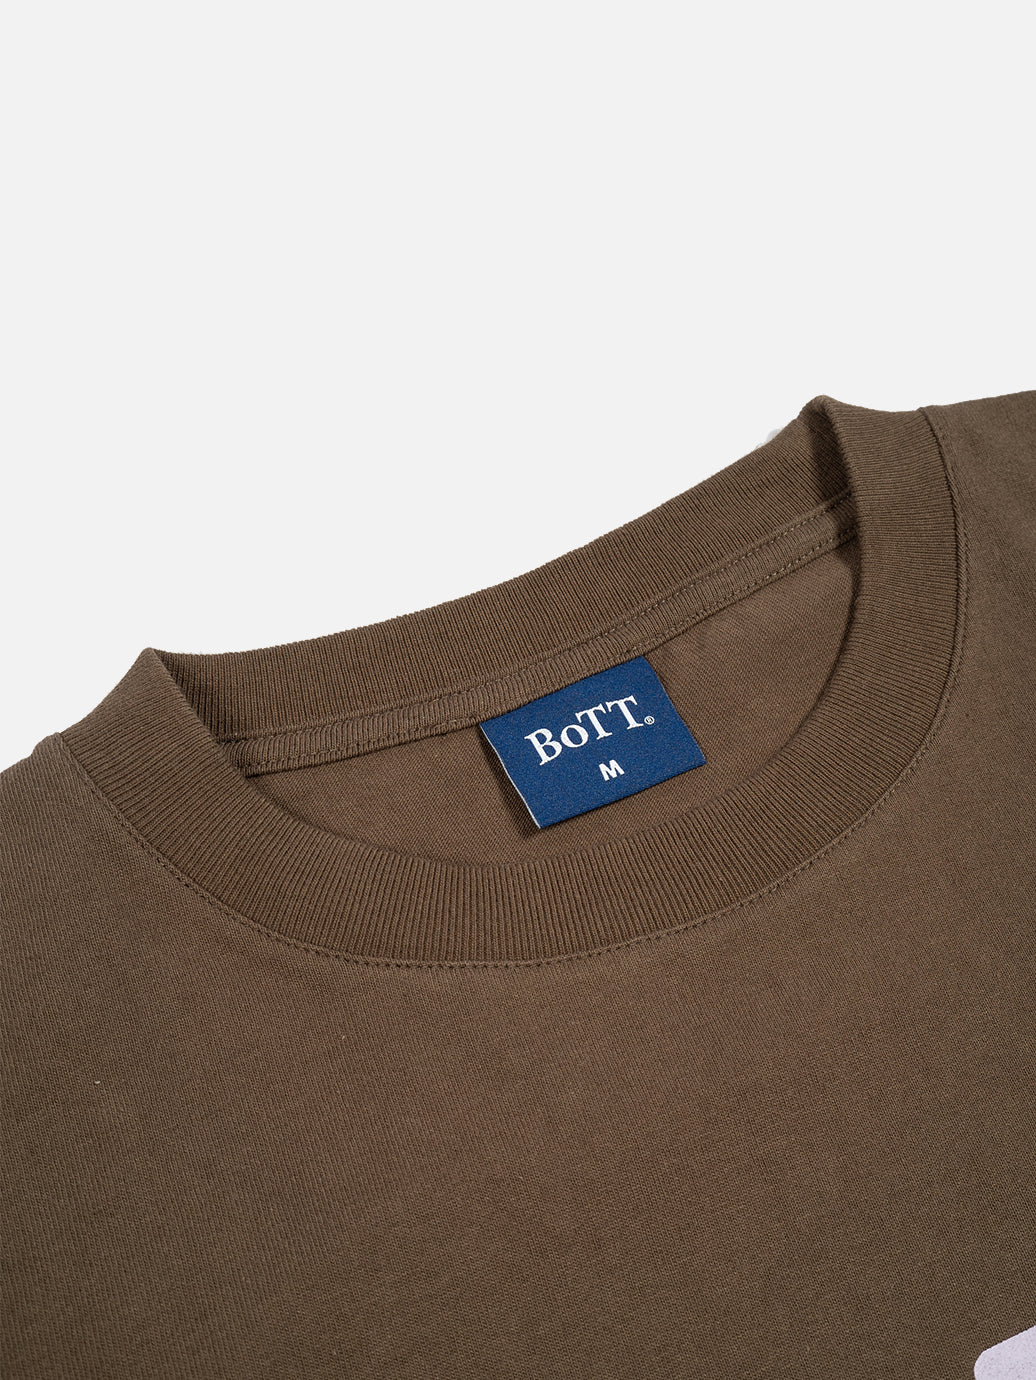 BoTT Star Logo Tee